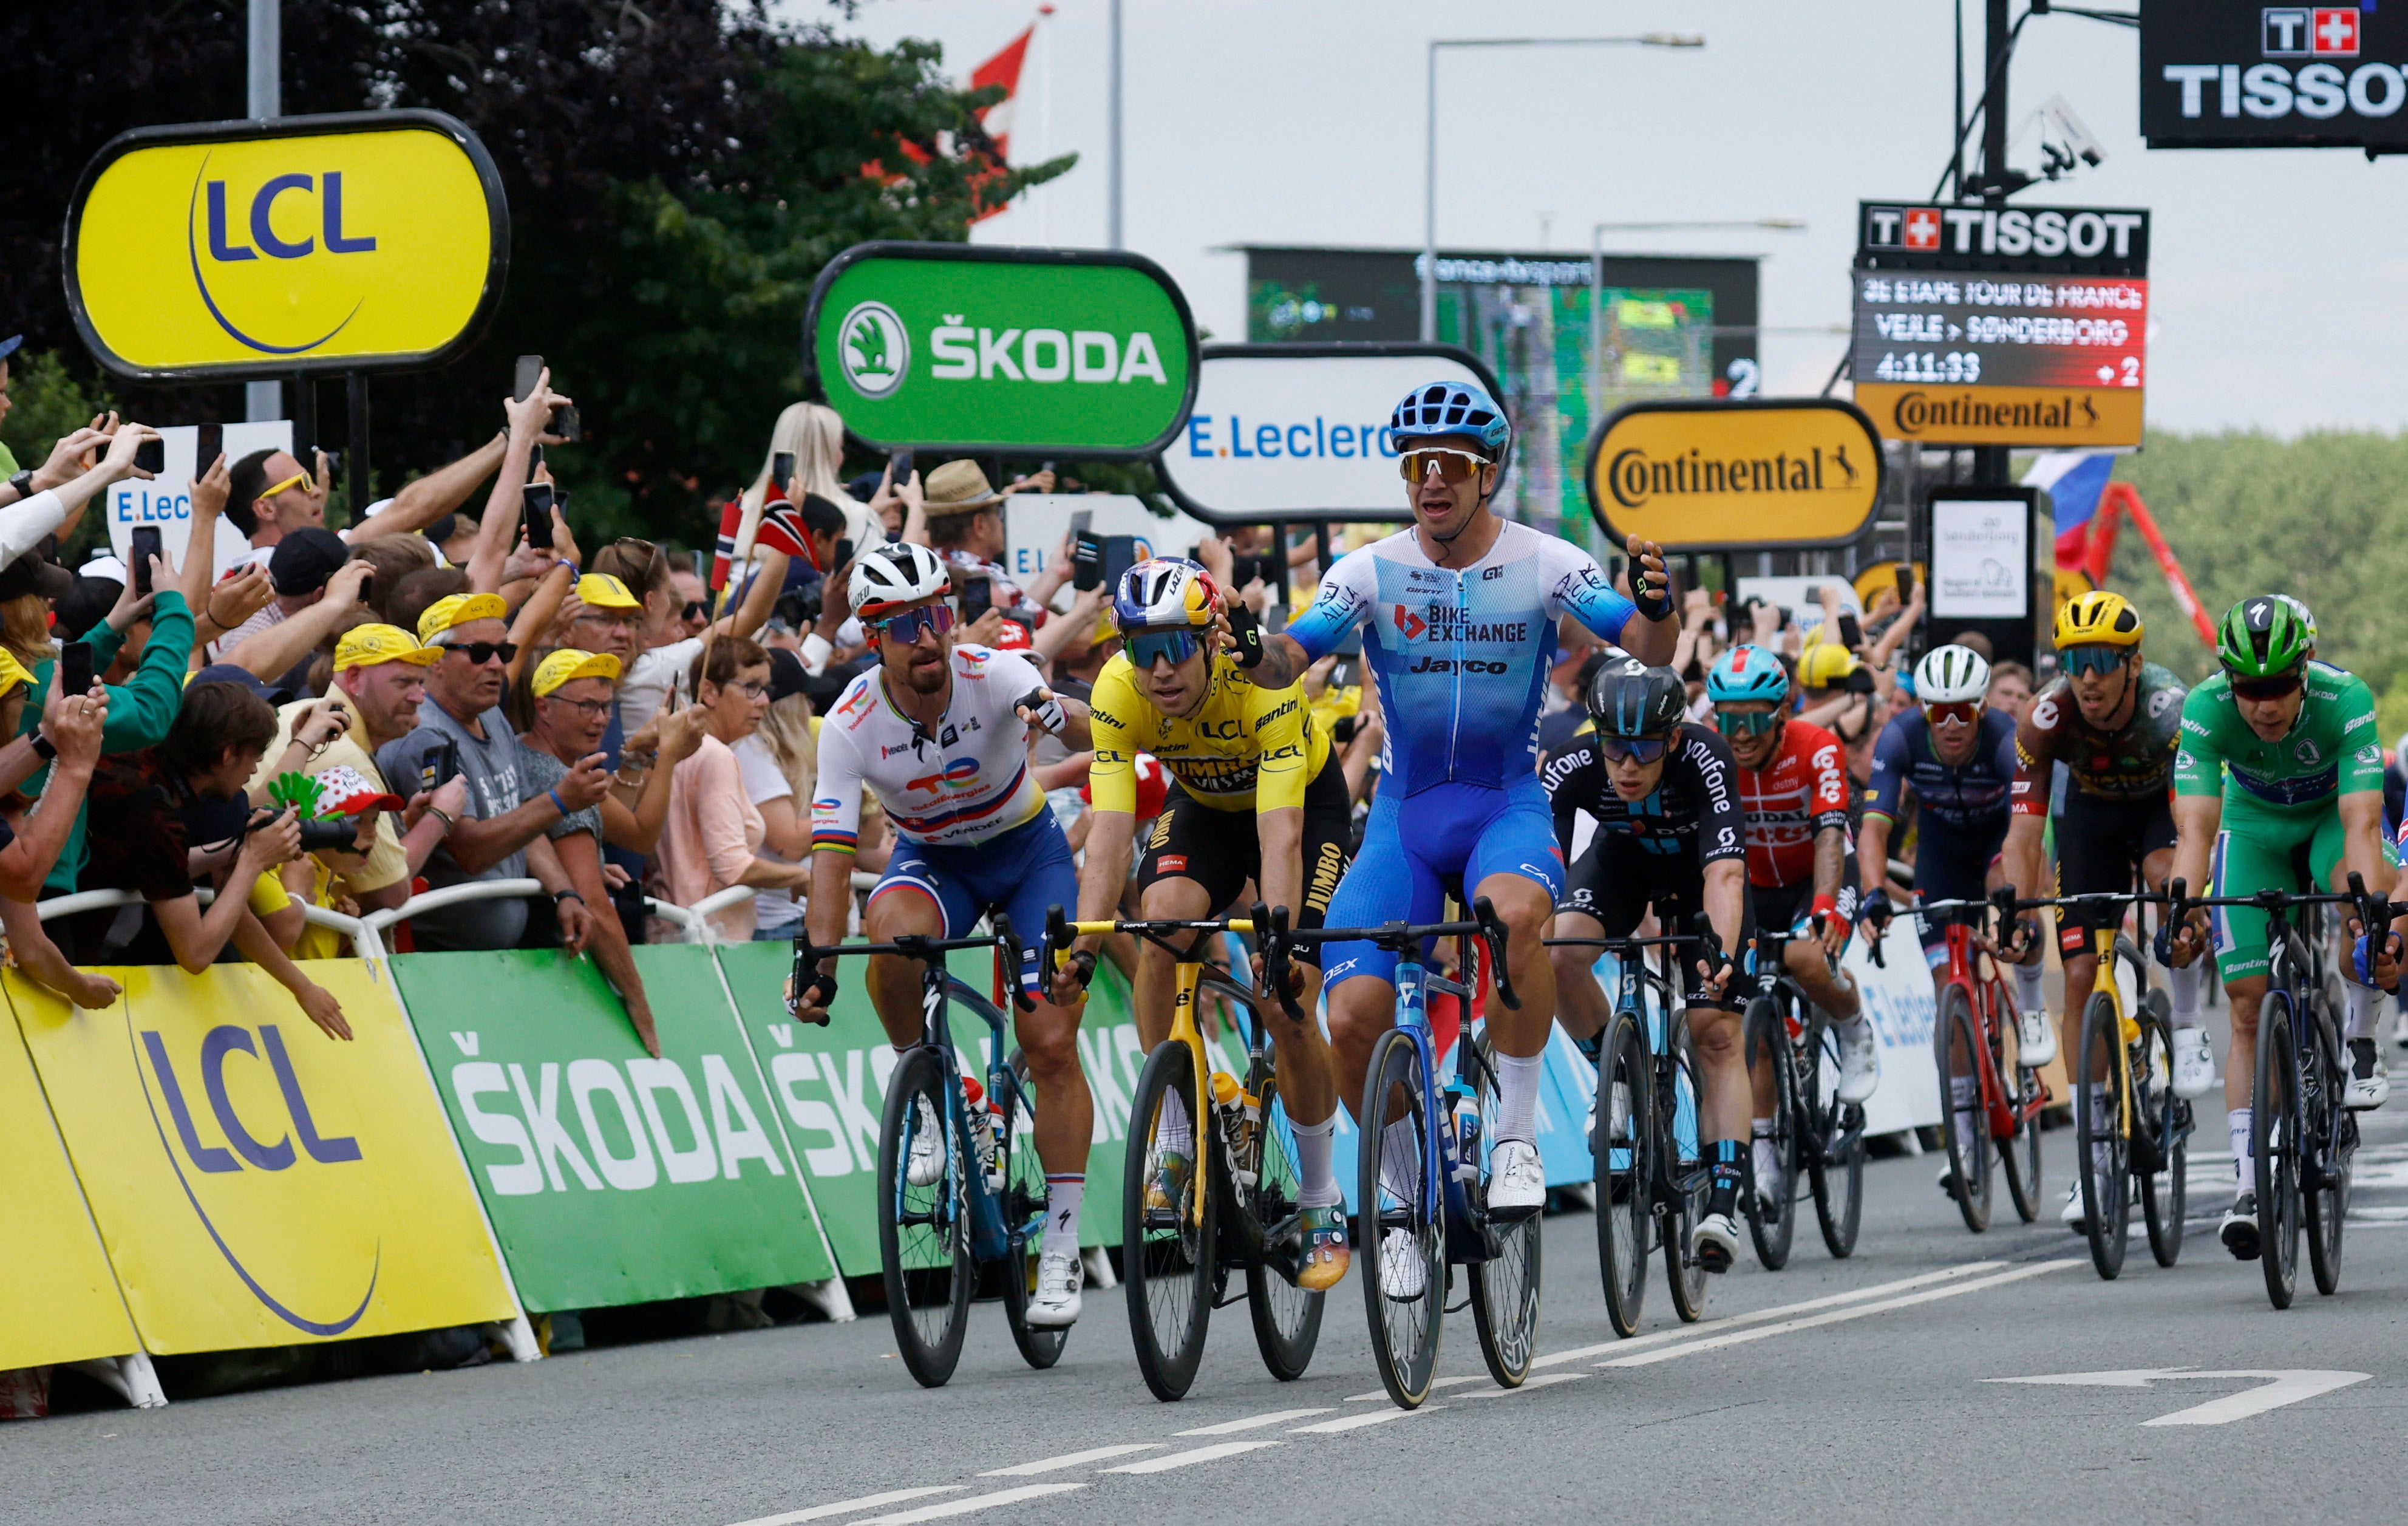 Tour de France LIVE Stage 3 result as Dylan Groenewegen wins photo finish after crash The Independent